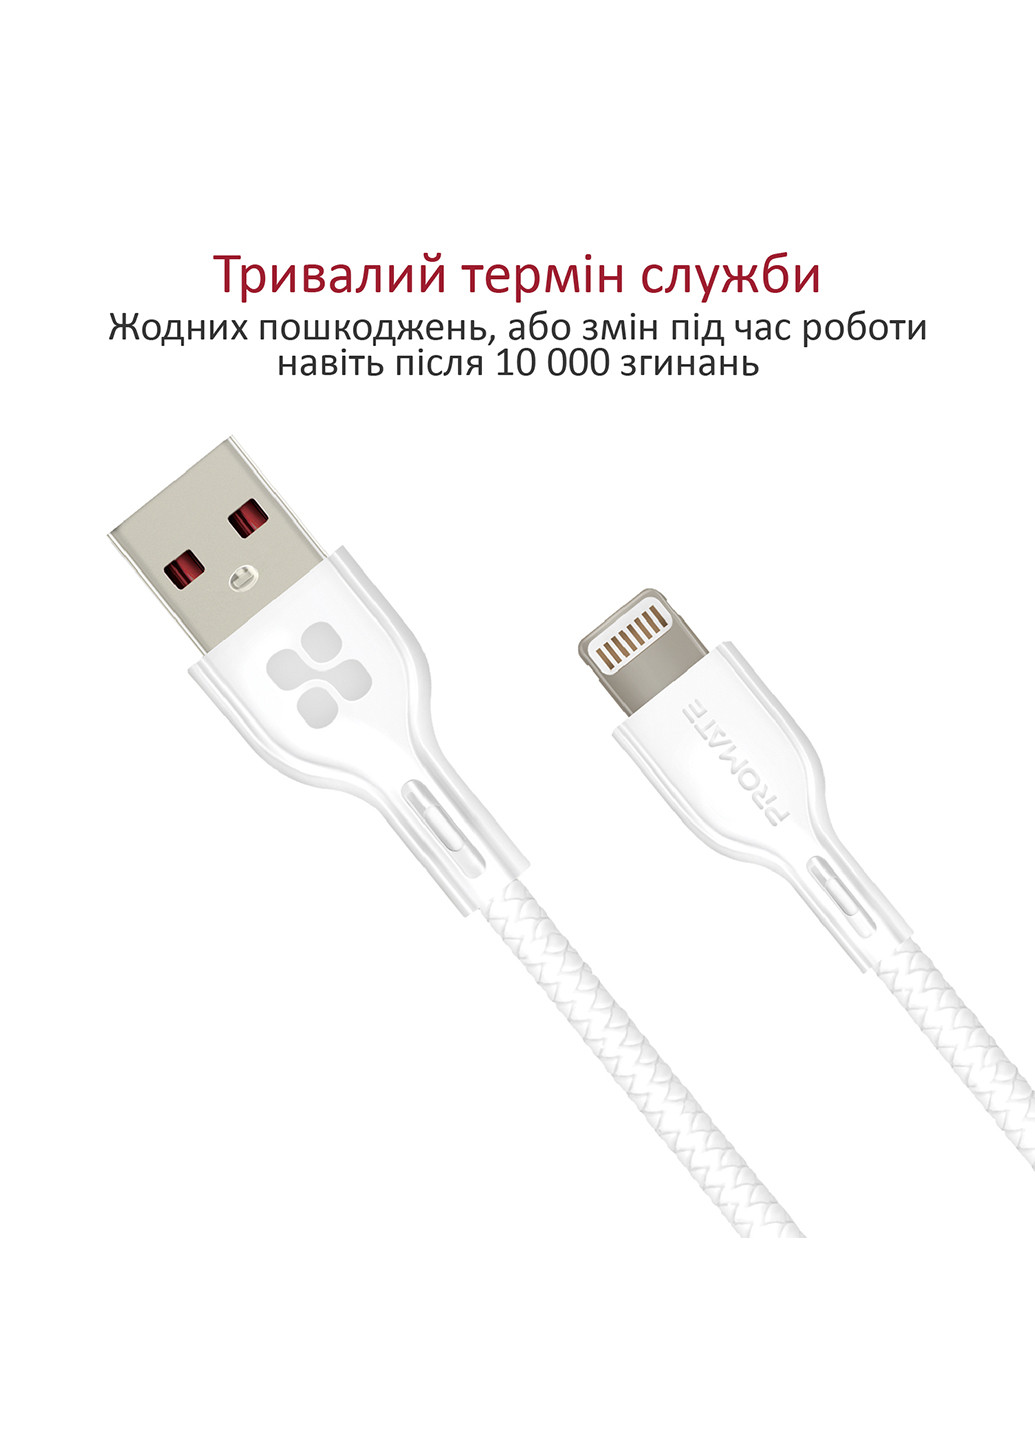 Кабель PowerBeam-25I USB-Lightning 0.25 м White Promate powerbeam-25i.white (188706466)